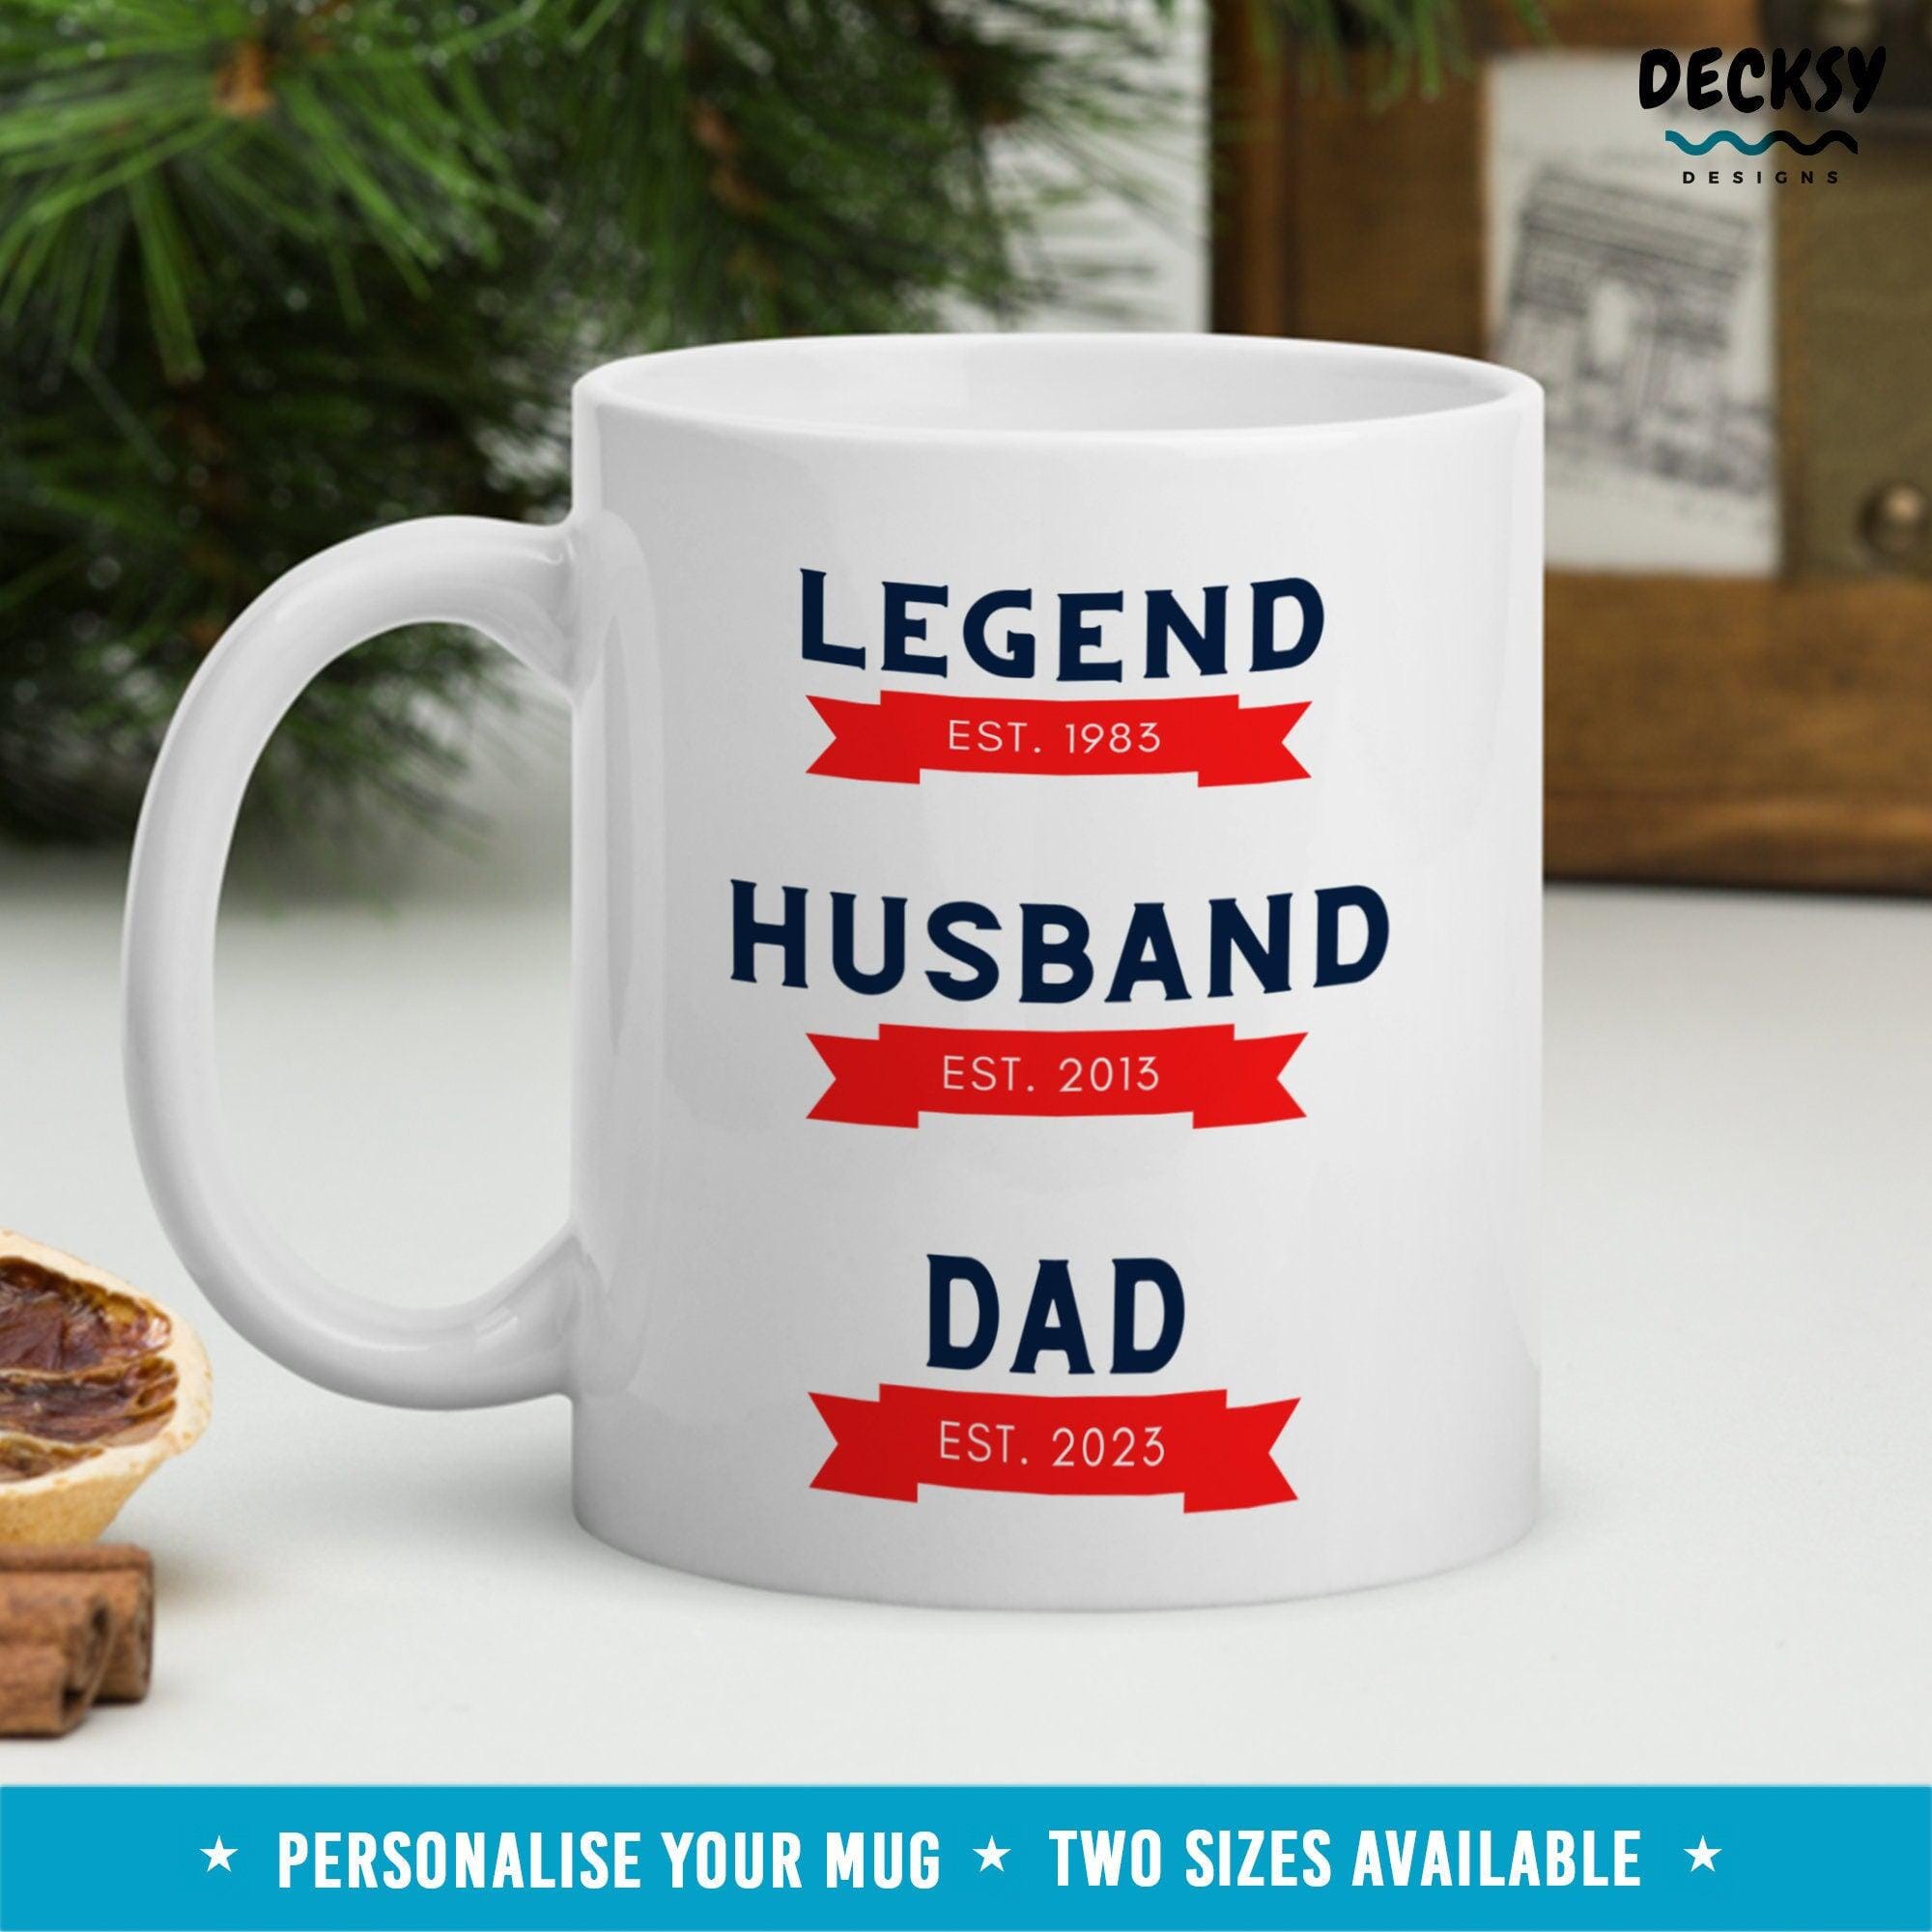 New Dad Gift, Personalised Coffee Mug-Home & Living:Kitchen & Dining:Drink & Barware:Drinkware:Mugs-DecksyDesigns-White Mug 11 oz-DecksyDesigns